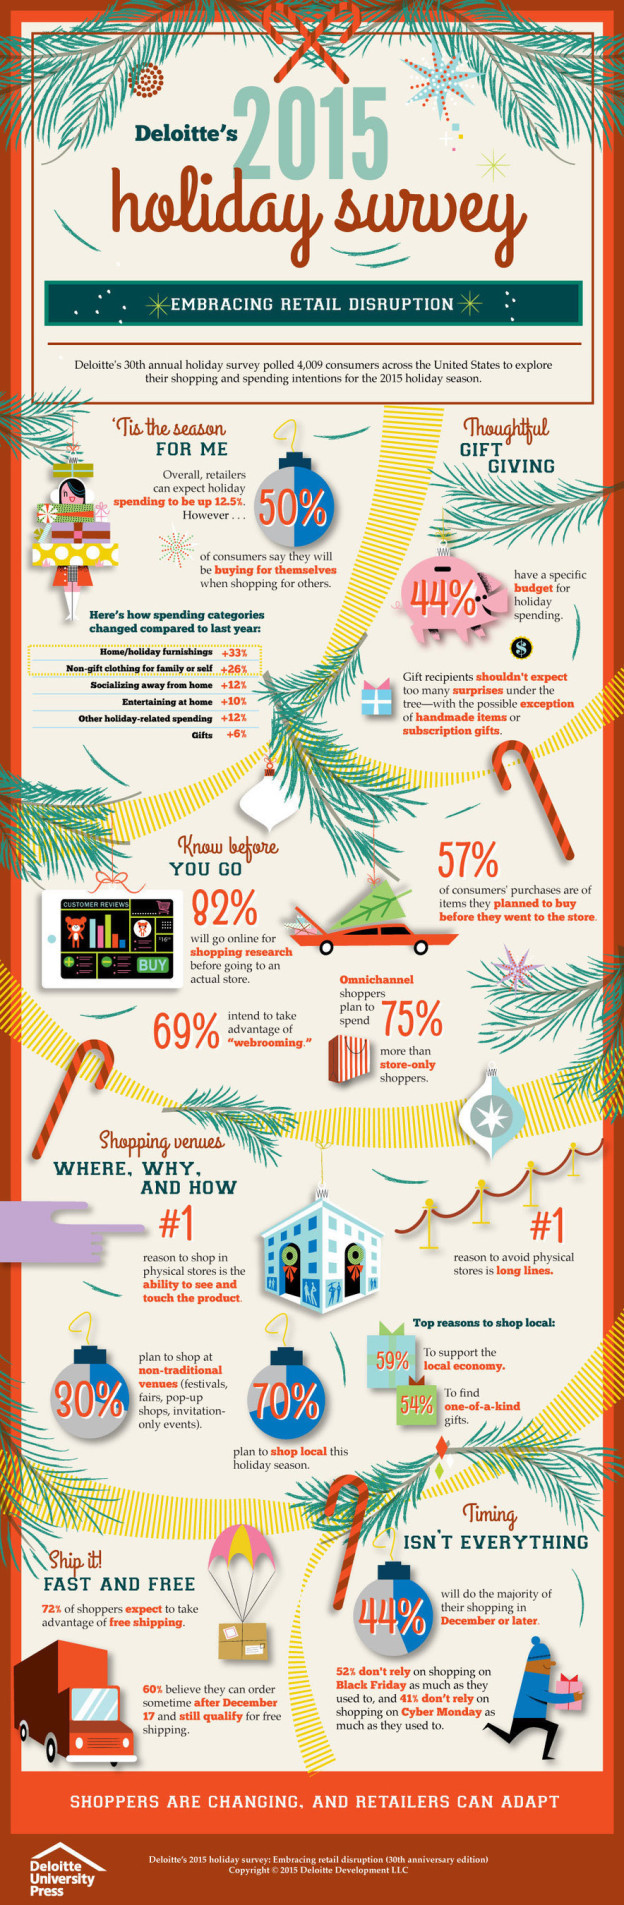 Deloitte Holiday Survey Infographic Multichannel Merchant